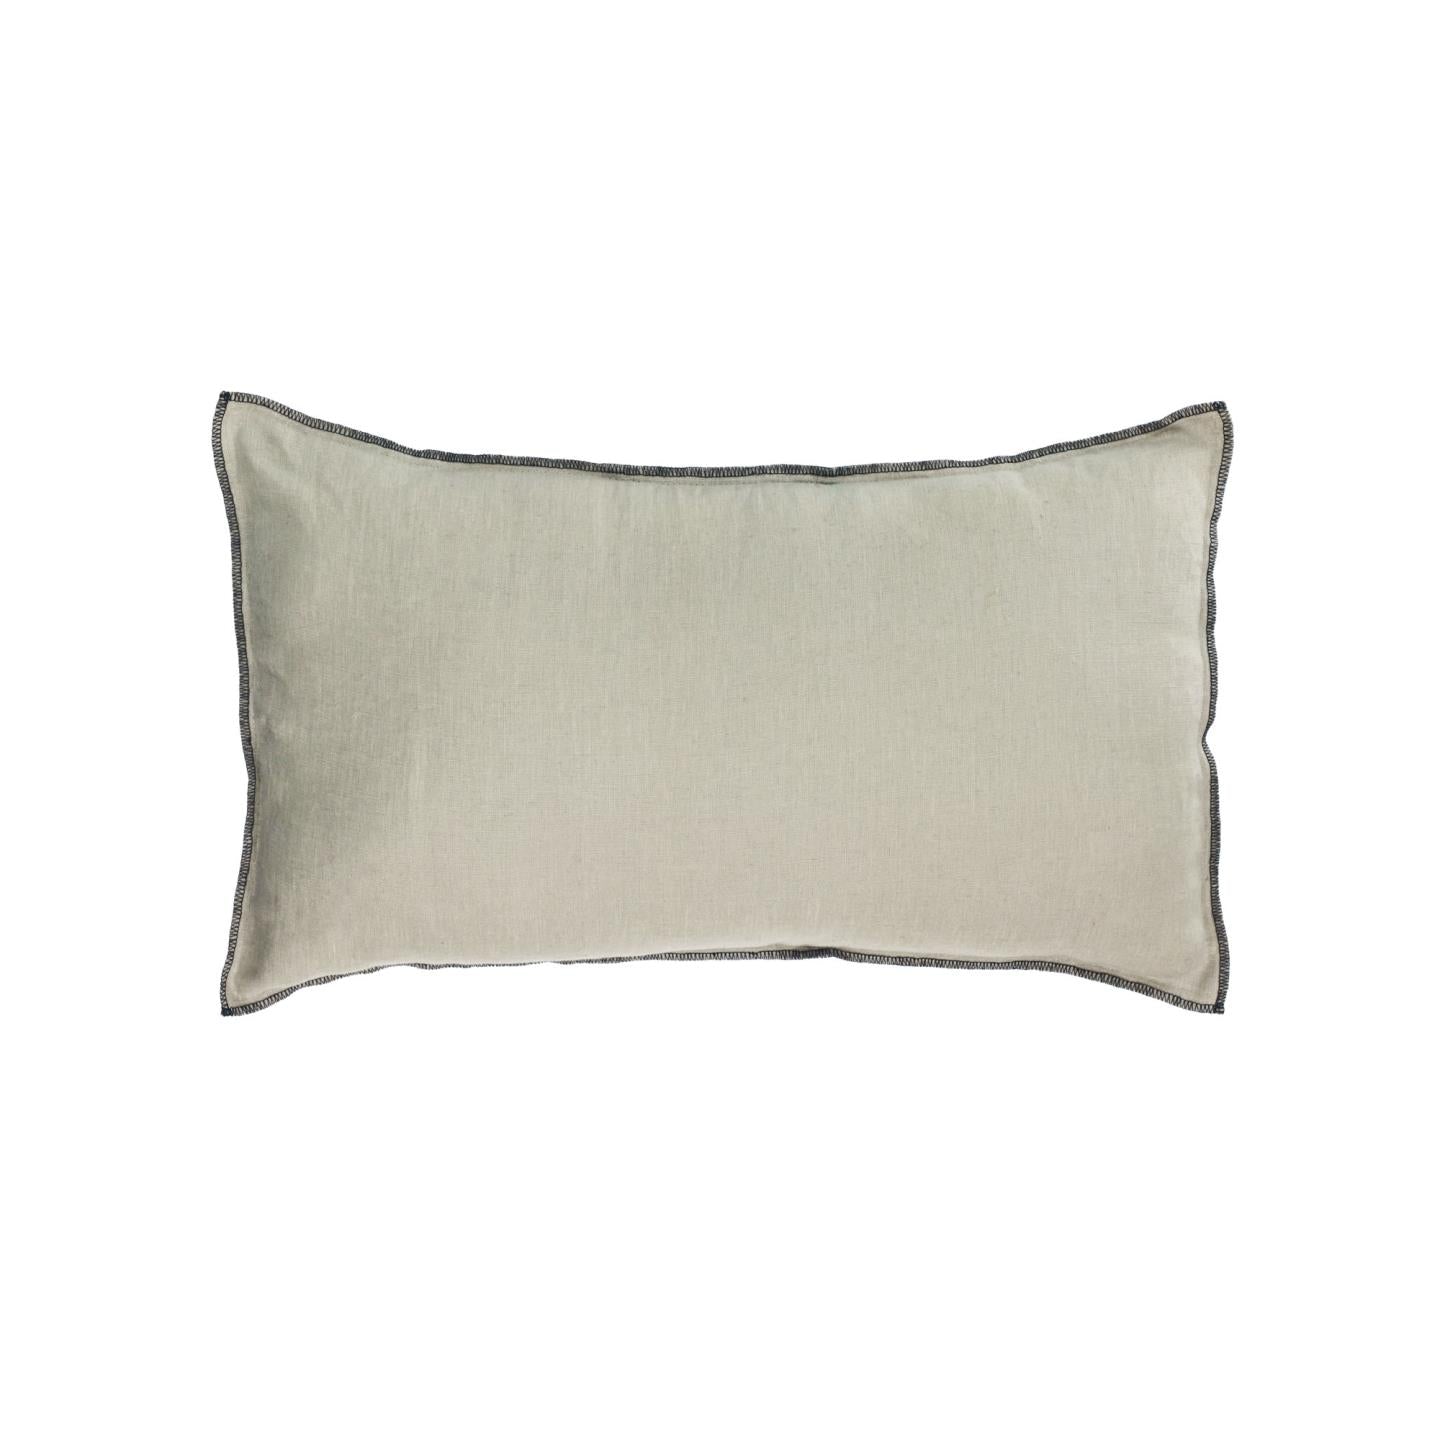 Elea 100% linen cushion cover in light grey 30 x 50 cm